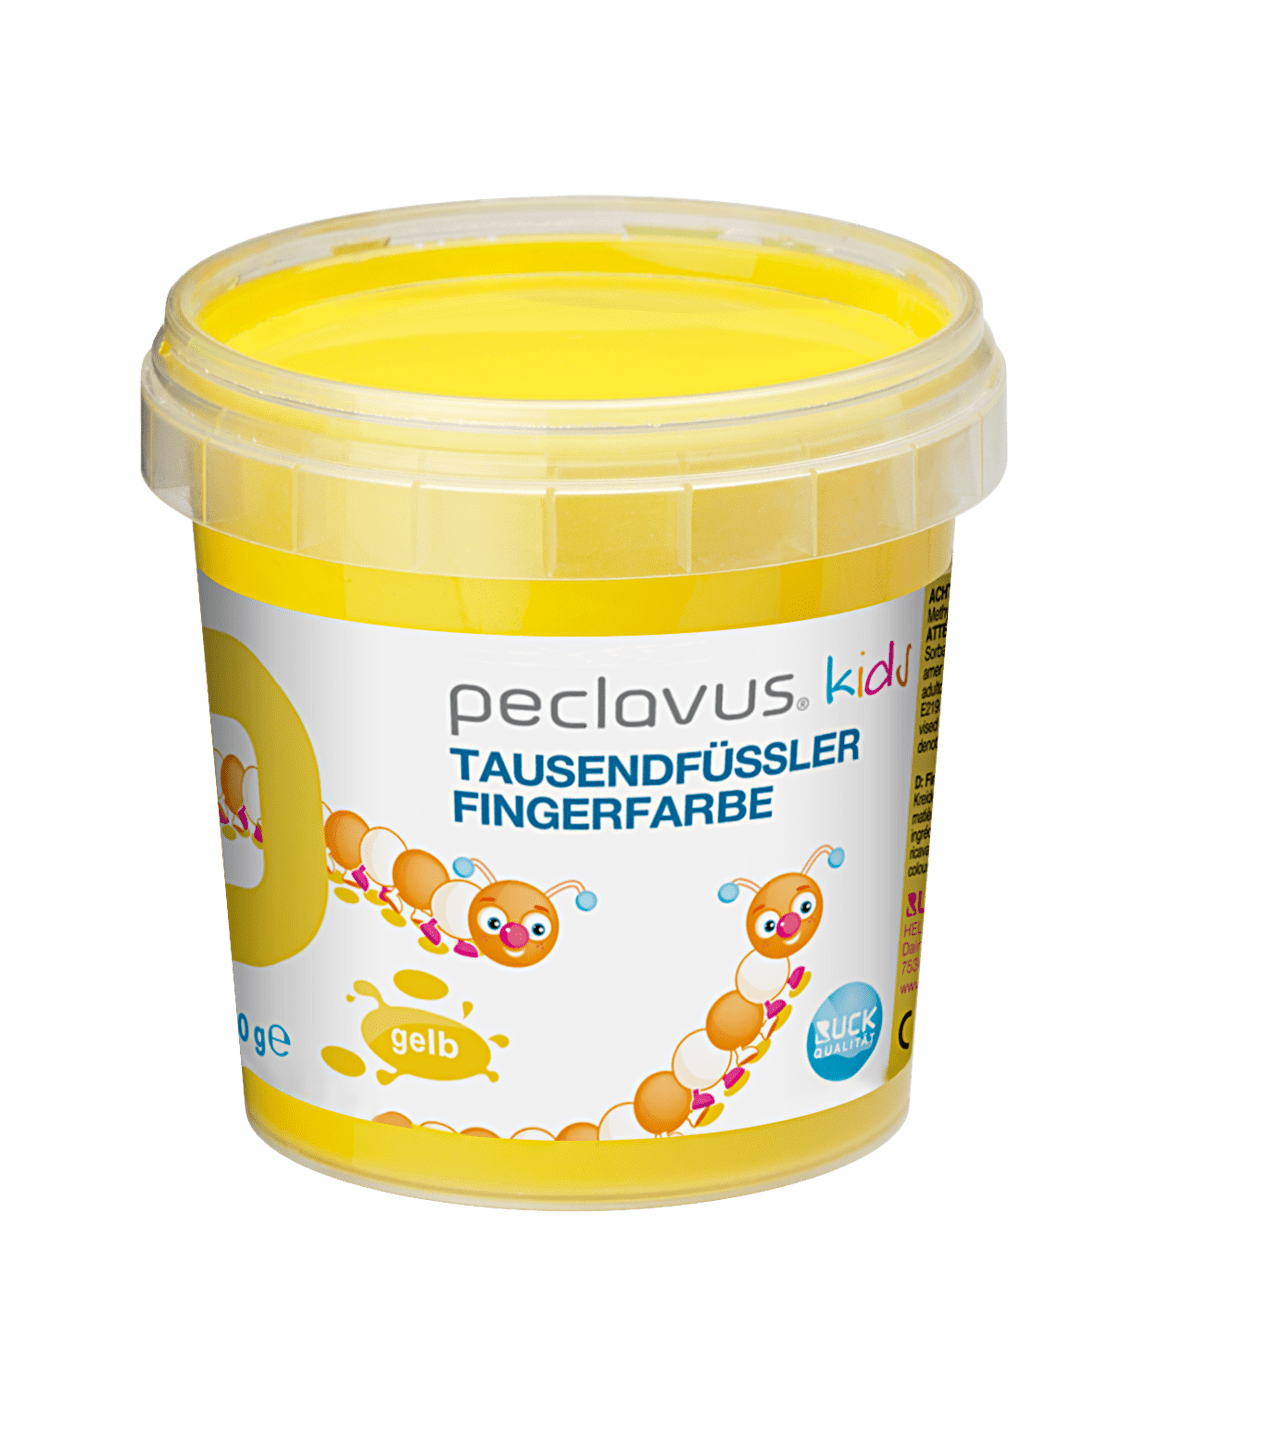 peclavus - Fingerfarbe, 150 g in gelb